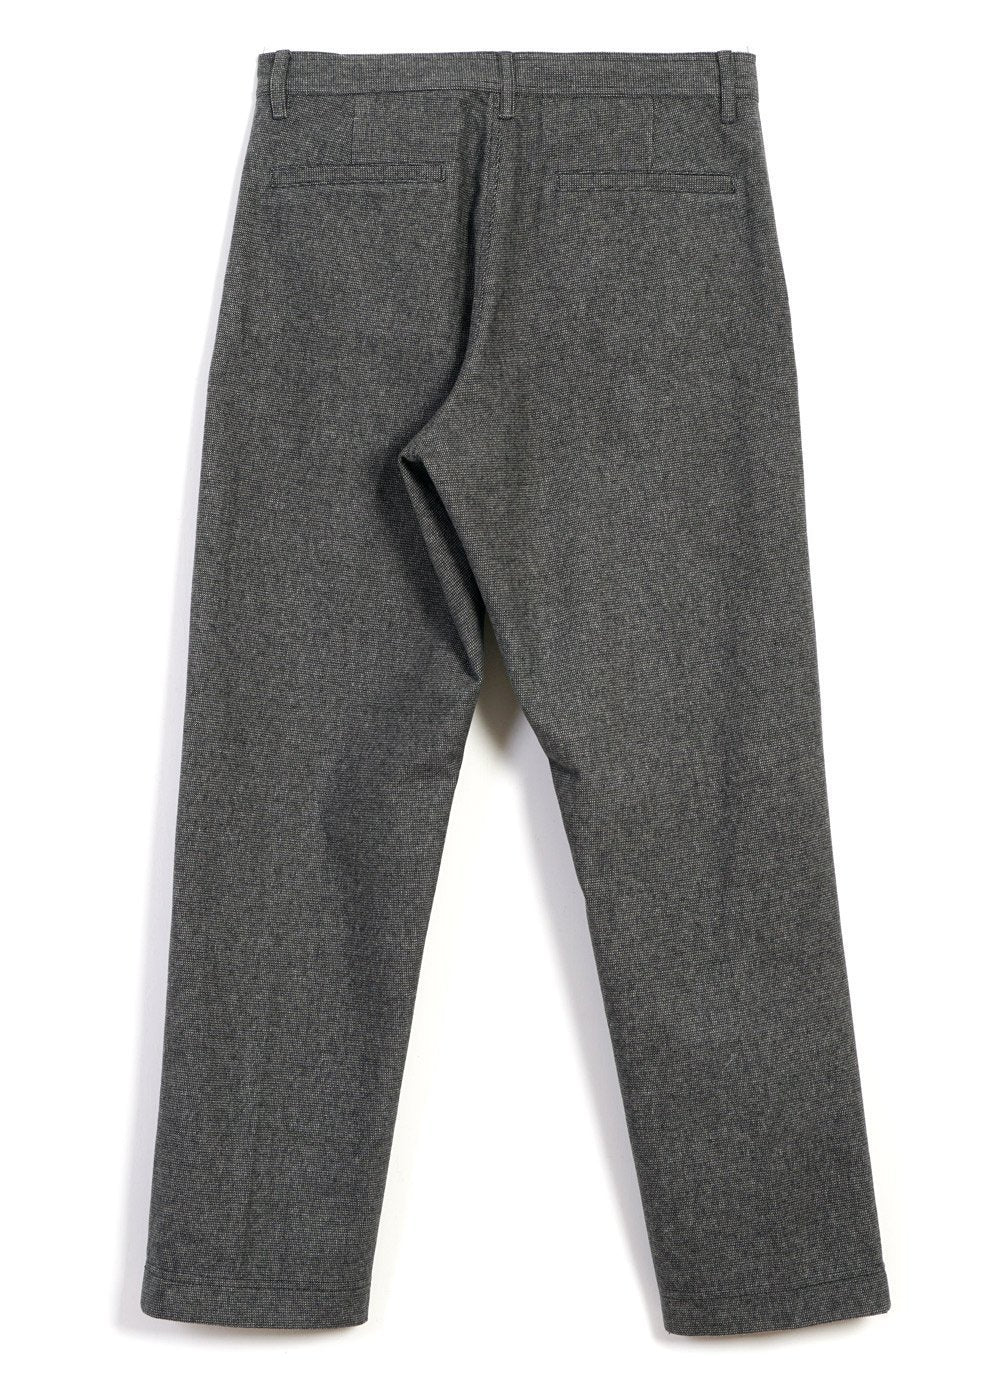 KEN | Wide Cut Trousers | Gravel | HANSEN Garments